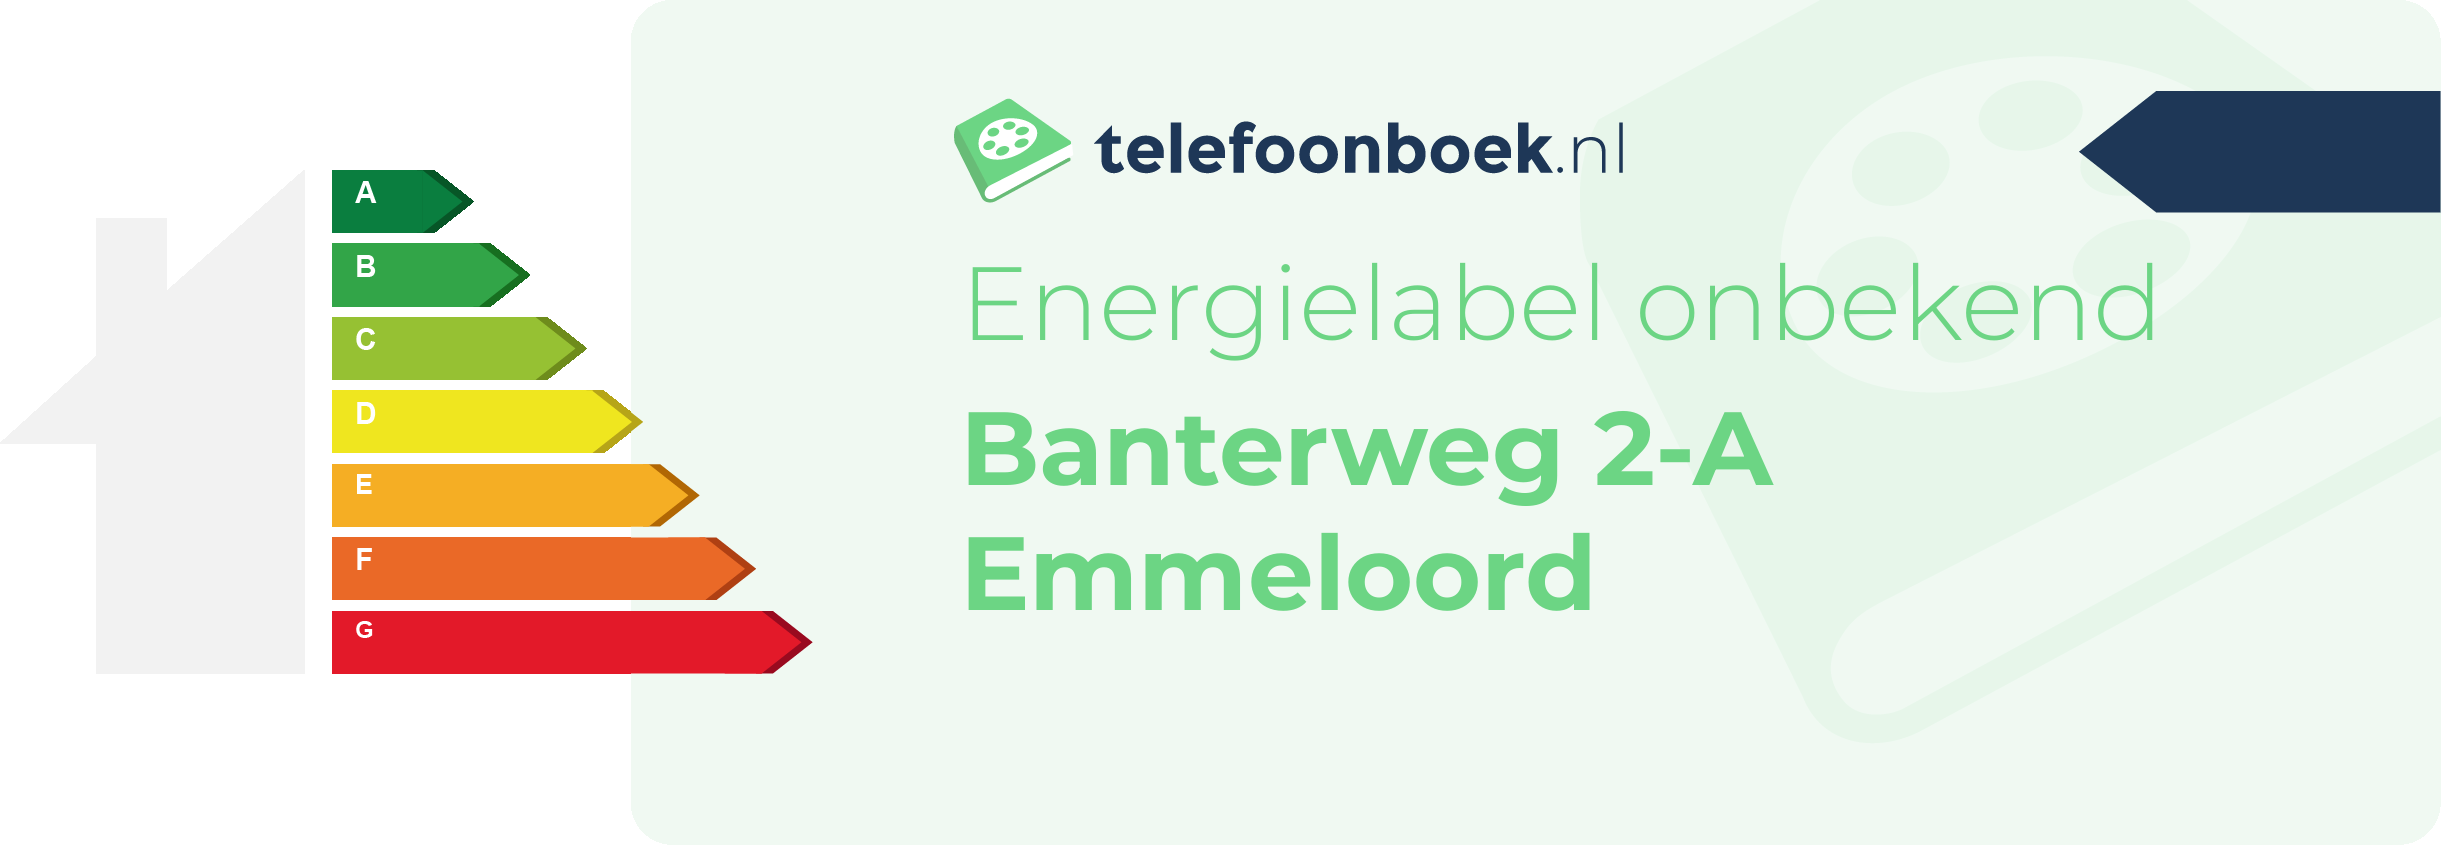 Energielabel Banterweg 2-A Emmeloord